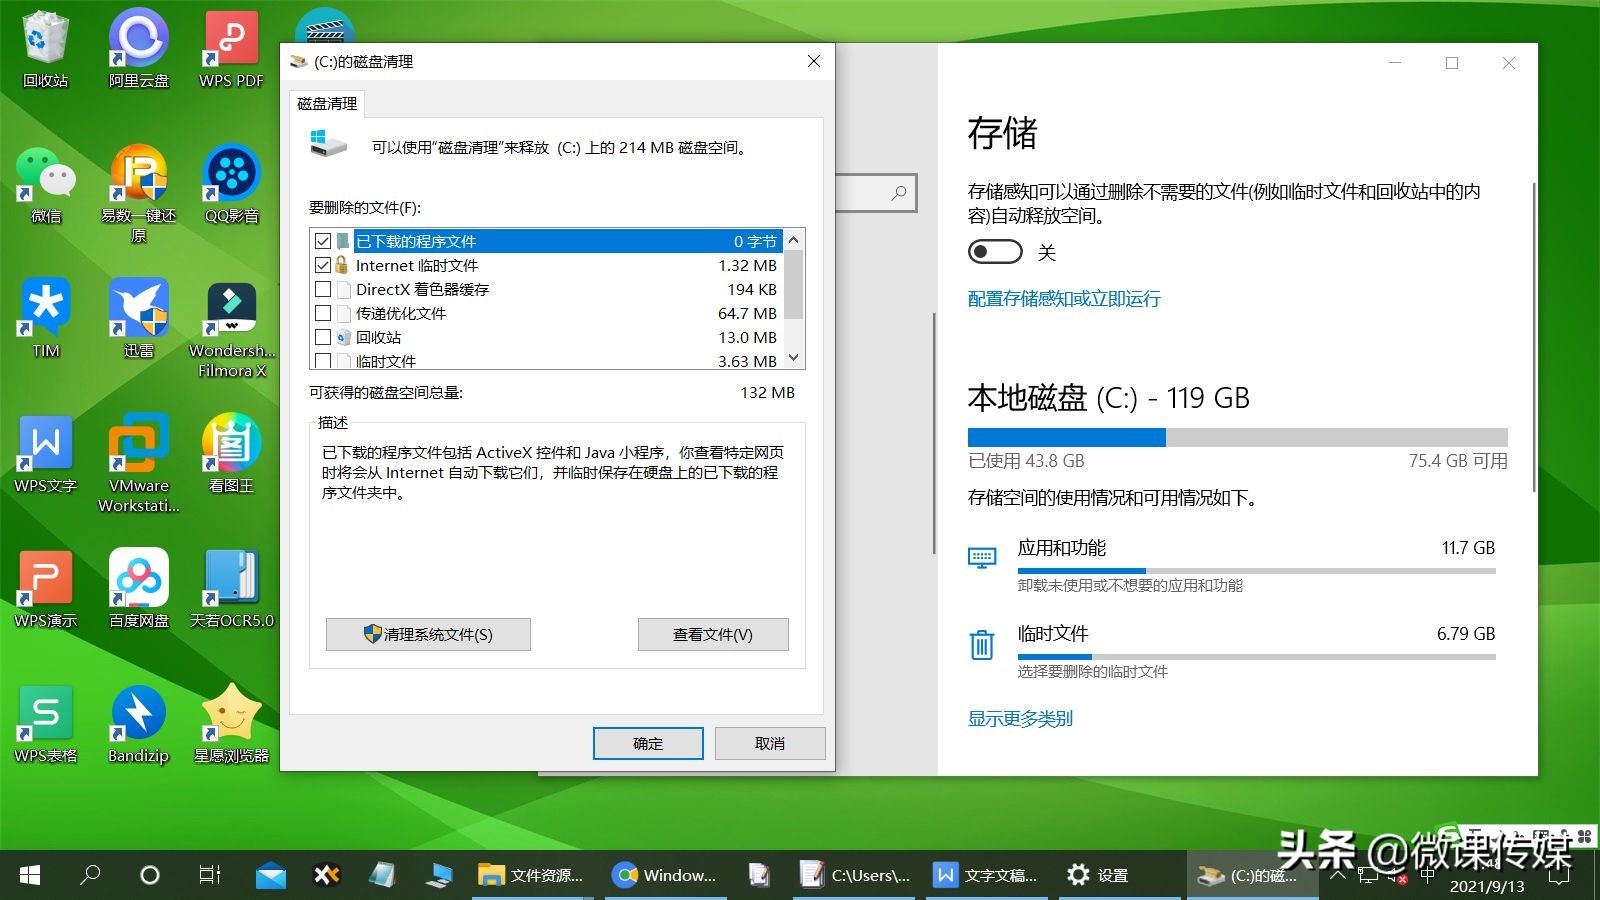 Windows 10中的Windows.old文件夹是什么，我可以删除它吗？